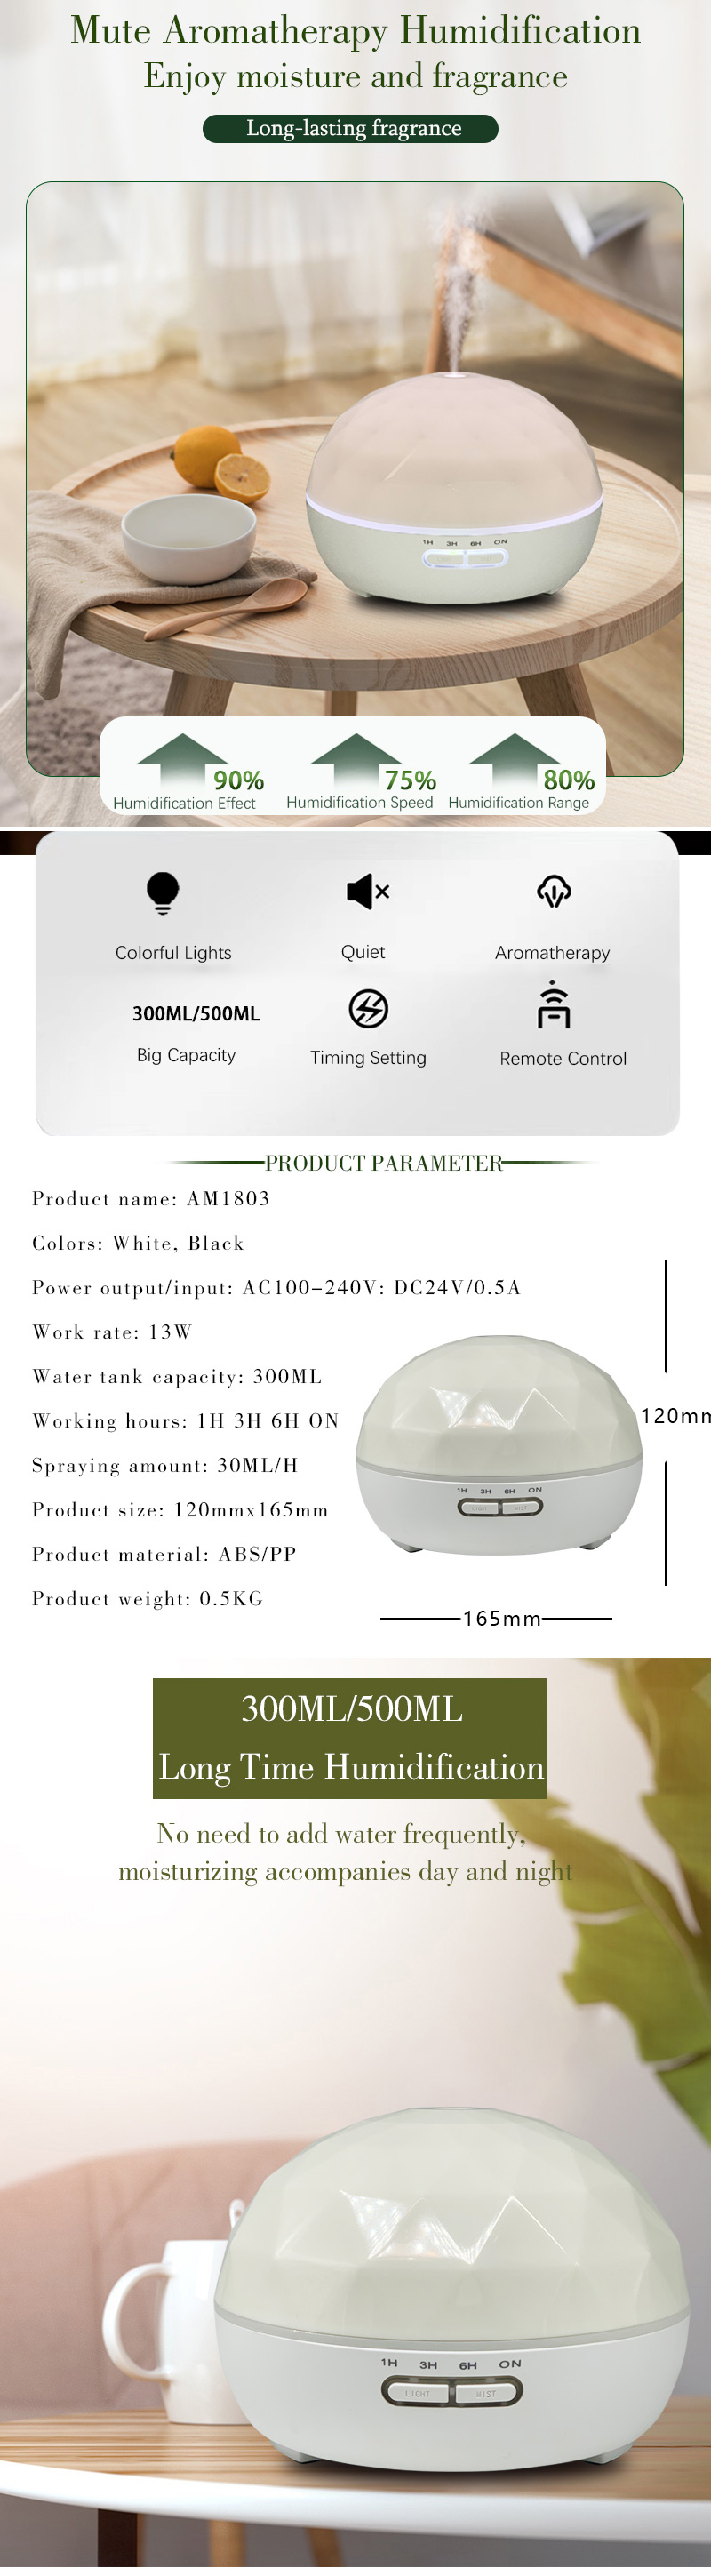 Ultrasonic humidifier supplier | Ultrasonic aroma humidifier | aroma humidifier supplier